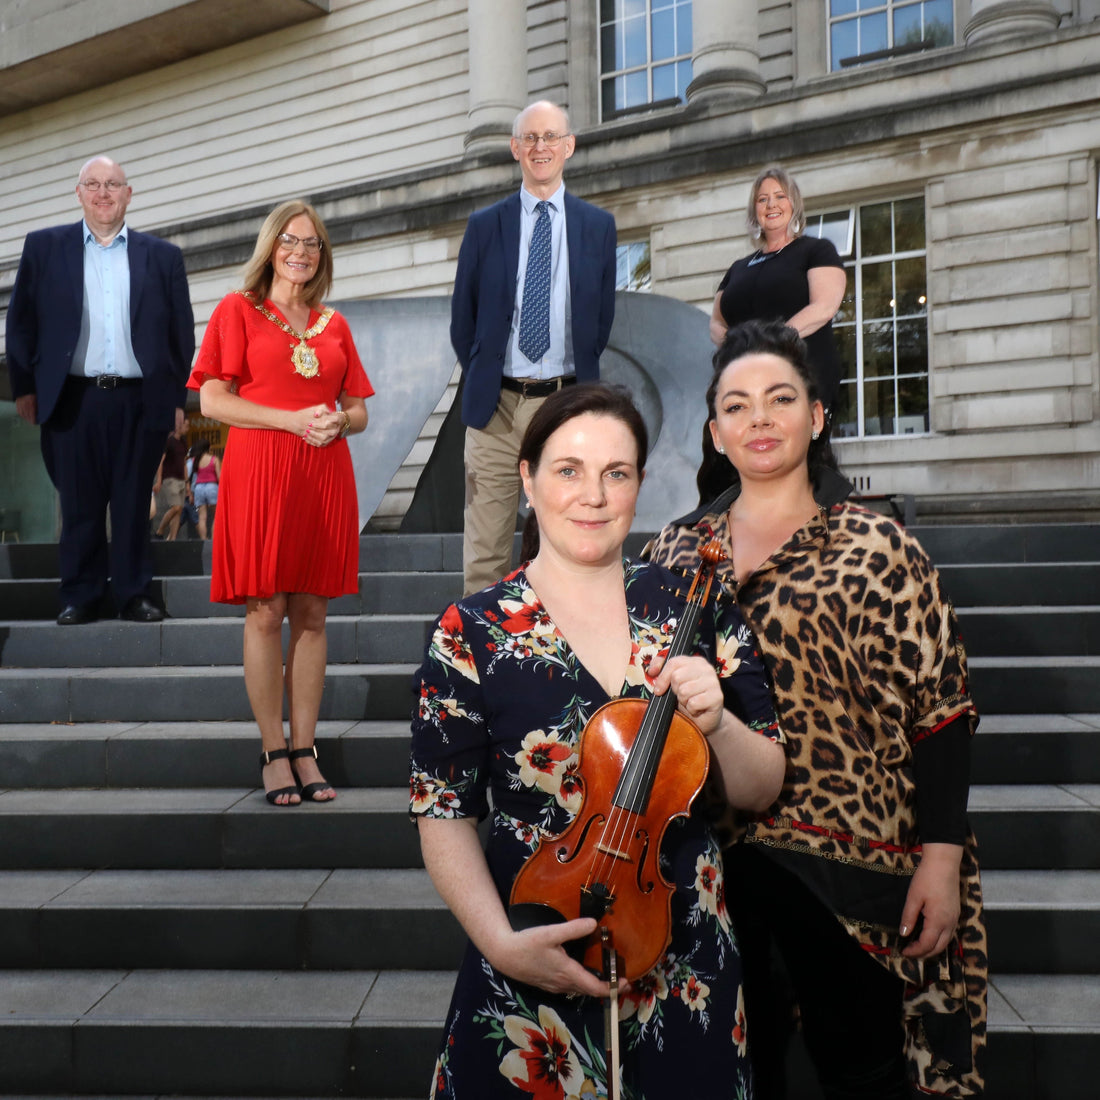 Belfast International Arts Festival celebrates its diamond anniversary with a packed Autumn programme